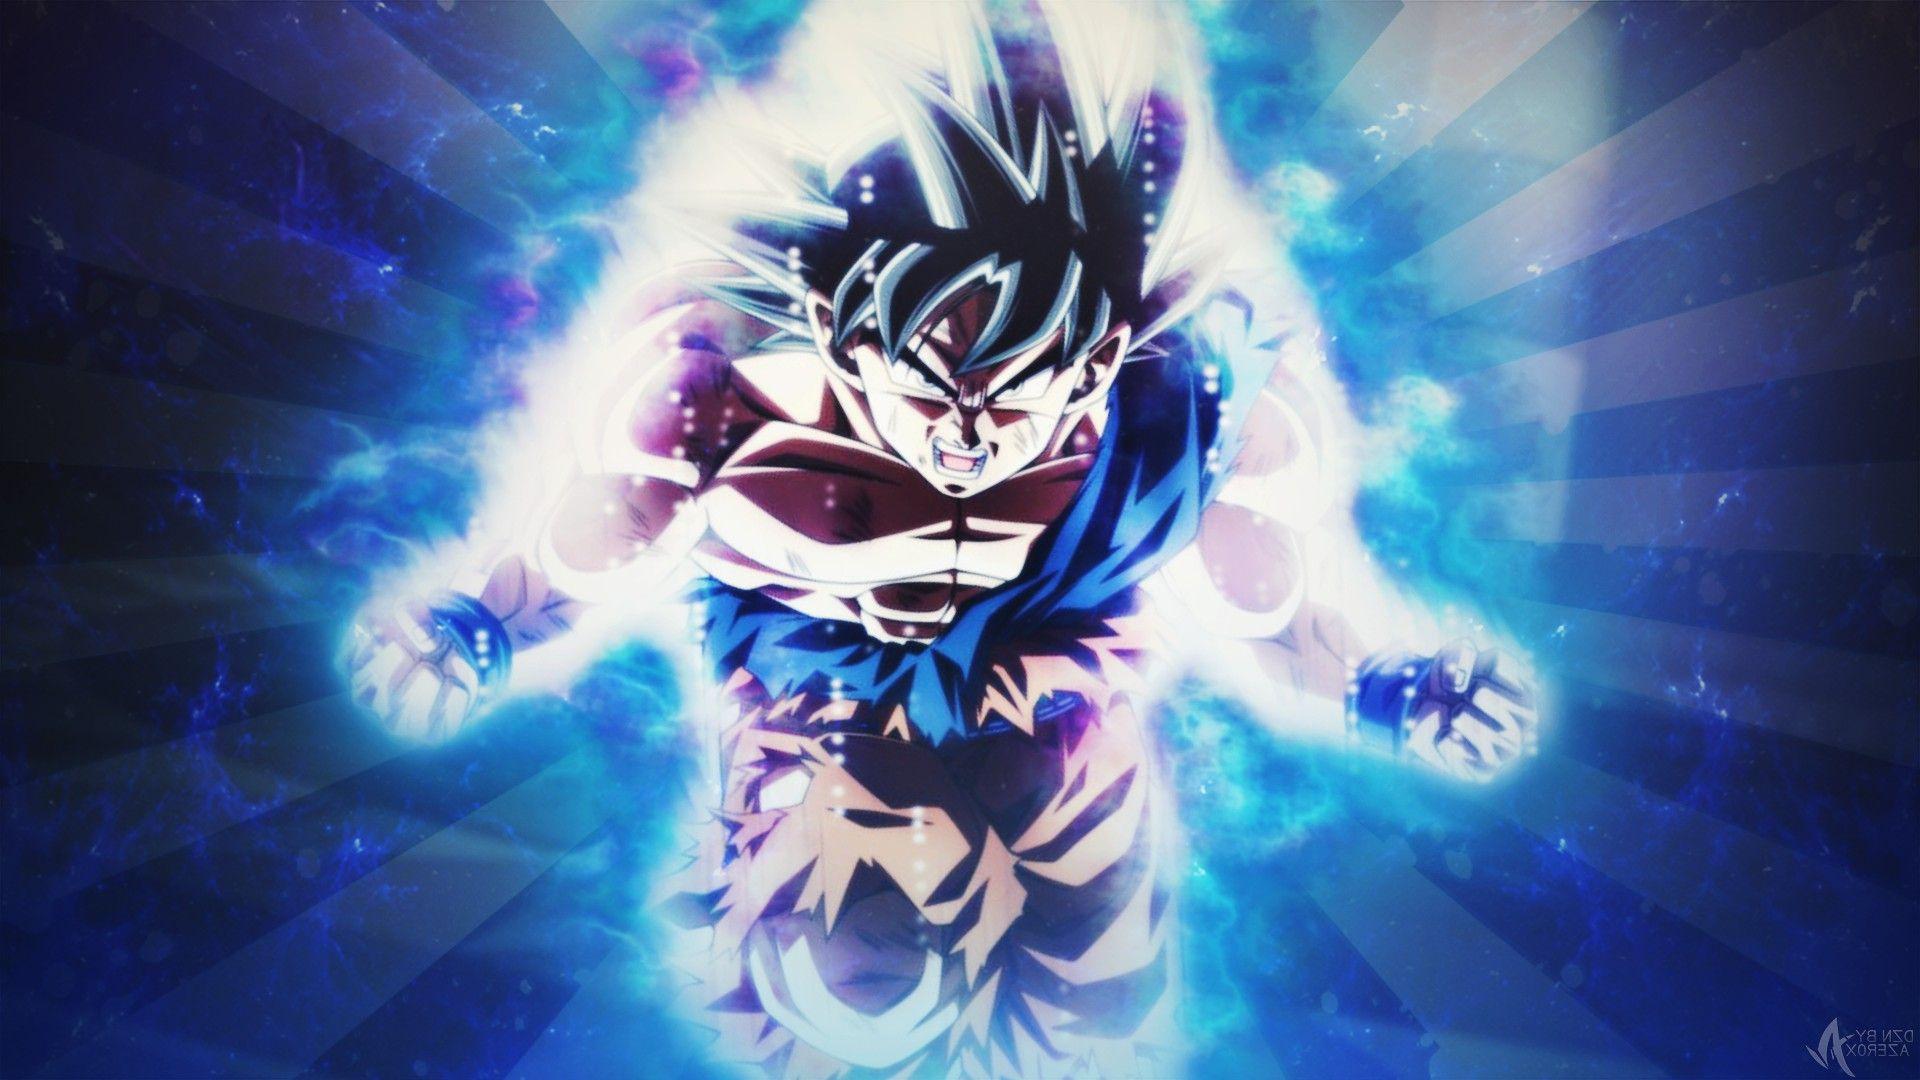 Ultra Instinct Goku Wallpapers Top Free Ultra Instinct Goku Backgrounds Wallpaperaccess